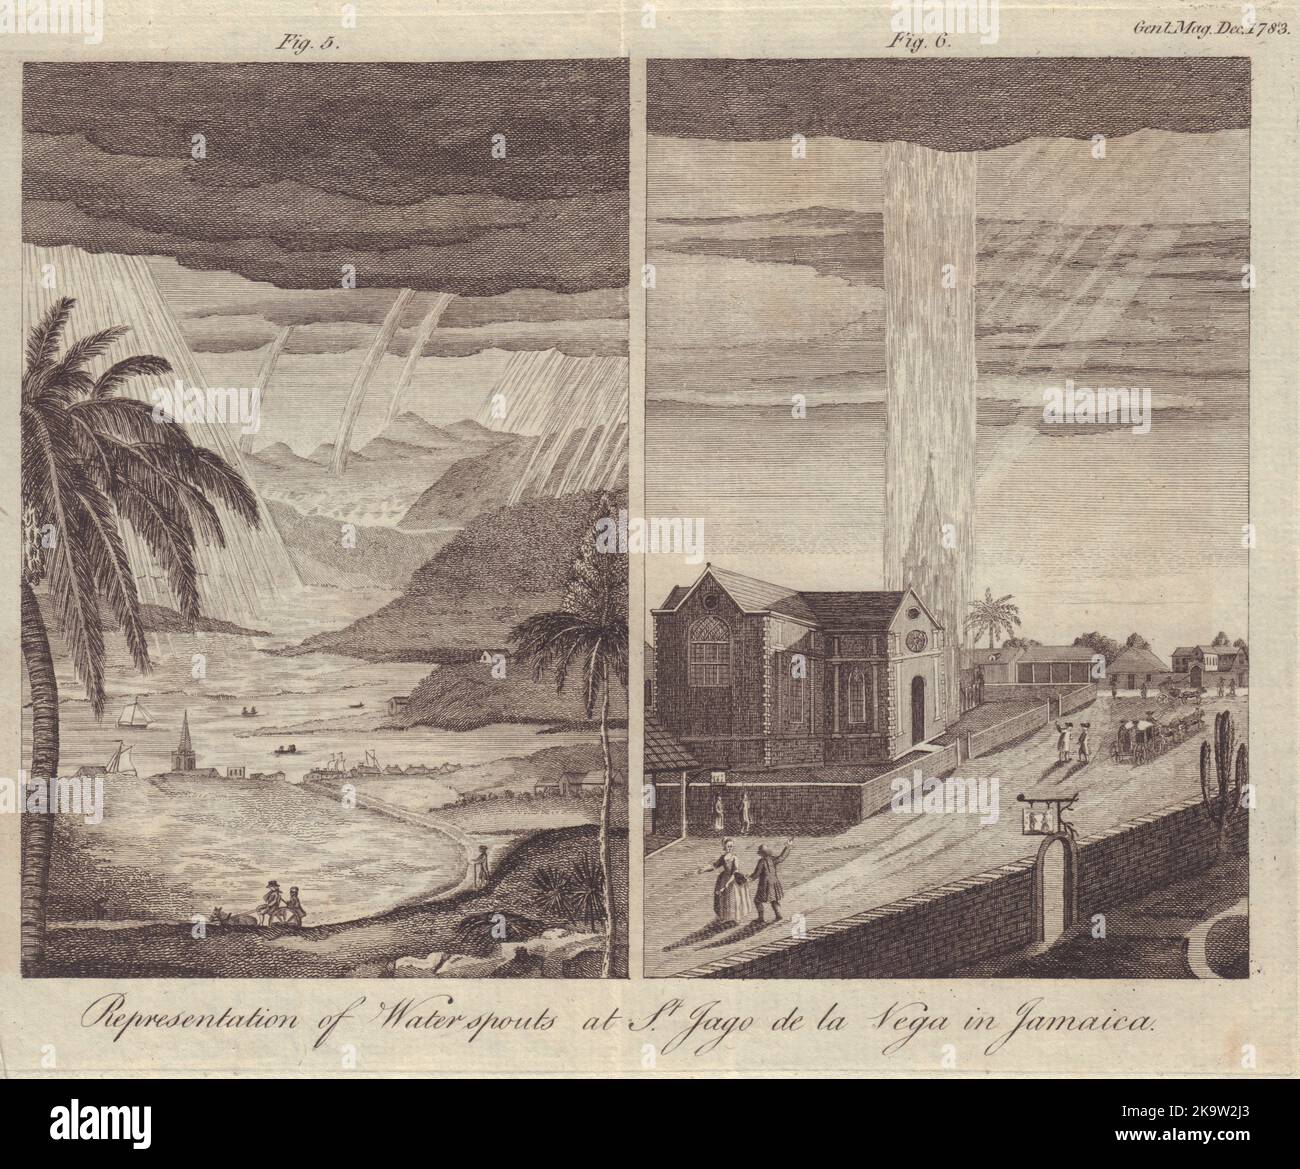 Waterspouts at St. Jago de la Vega in Jamaica. Spanish Town. GENTS MAG 1783 Stock Photo